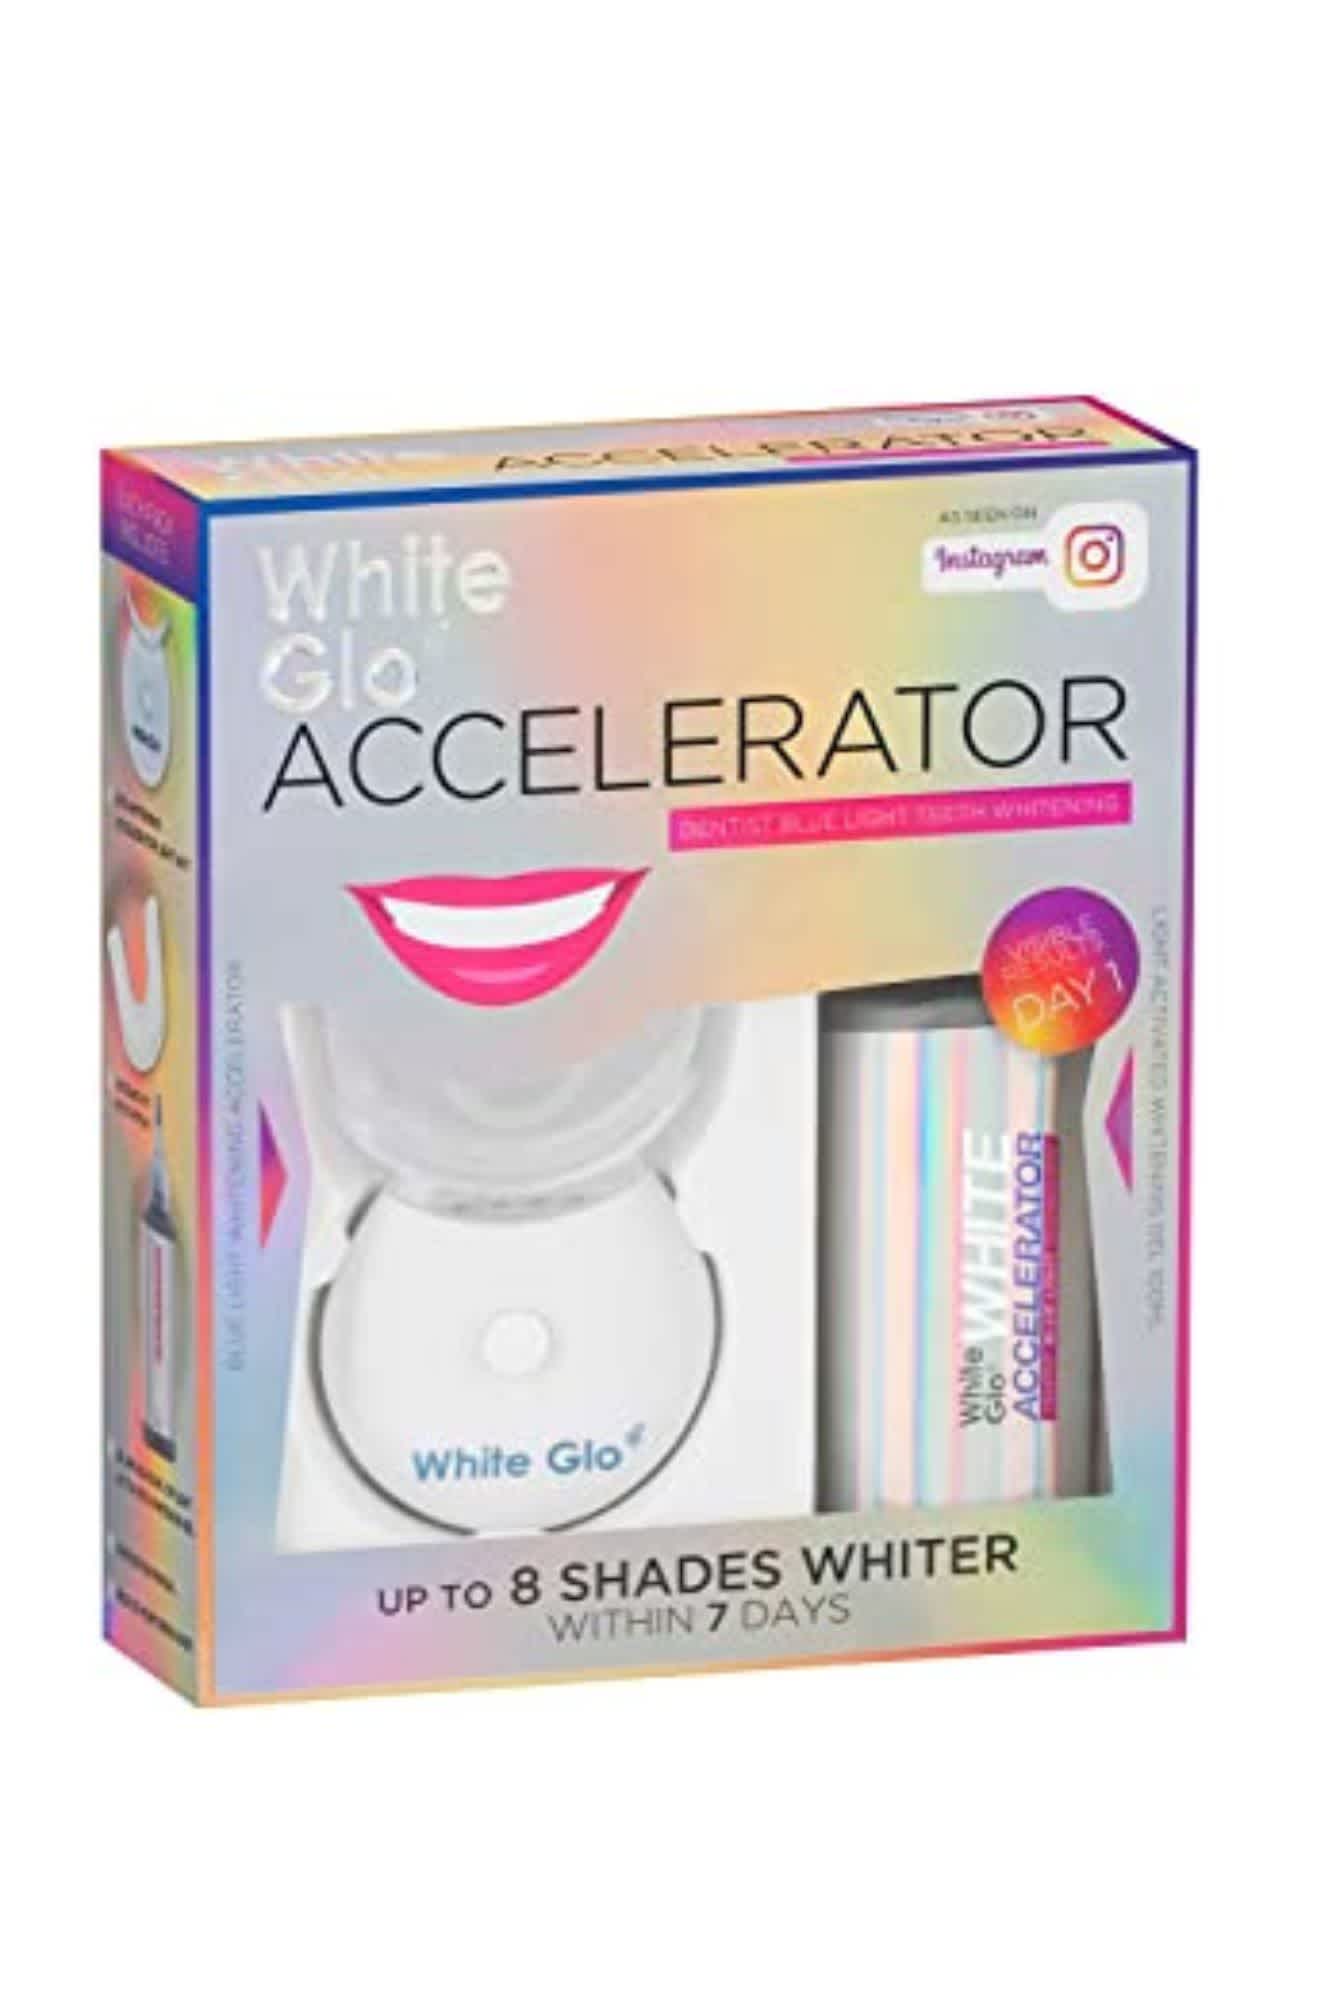 White Glo, Accelerator Teeth Whitening Kit ($35)